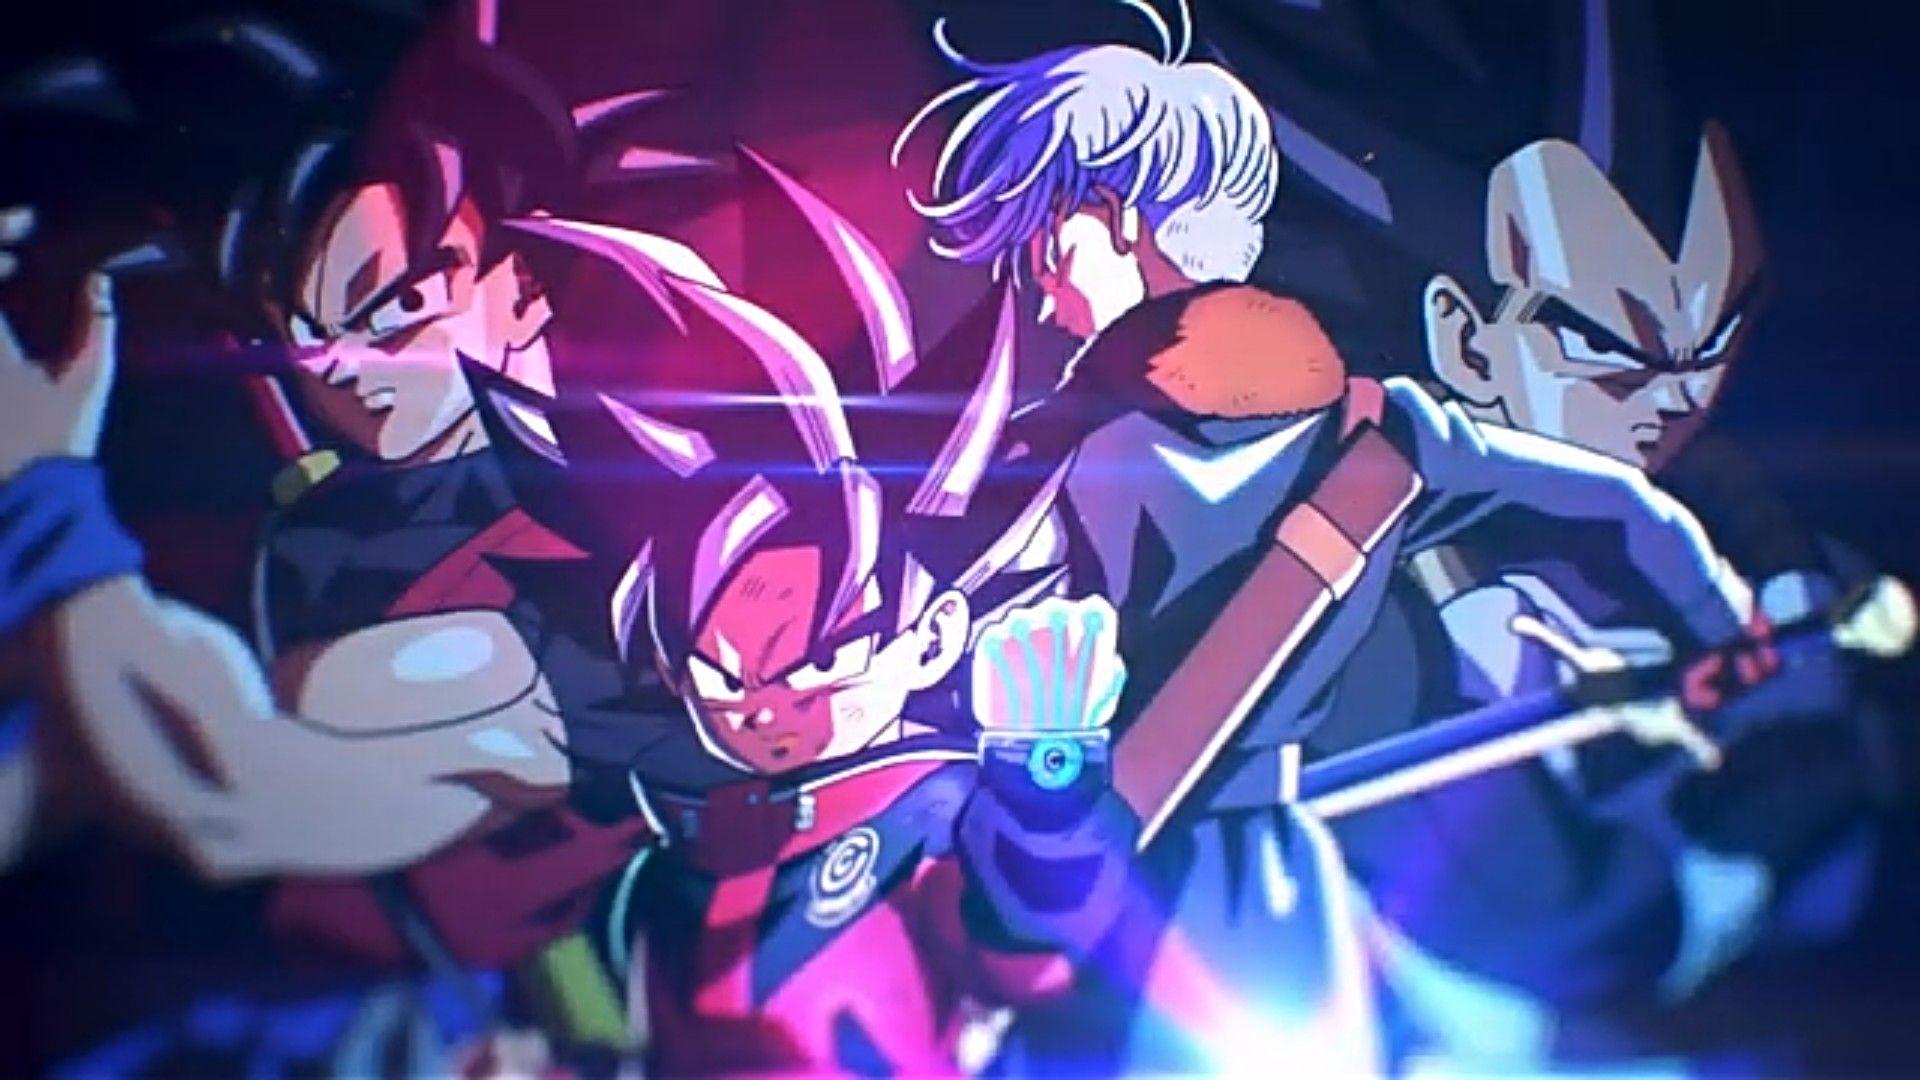 Dragon Ball Super Super Hero HD Digital Art Wallpaper, HD Anime 4K